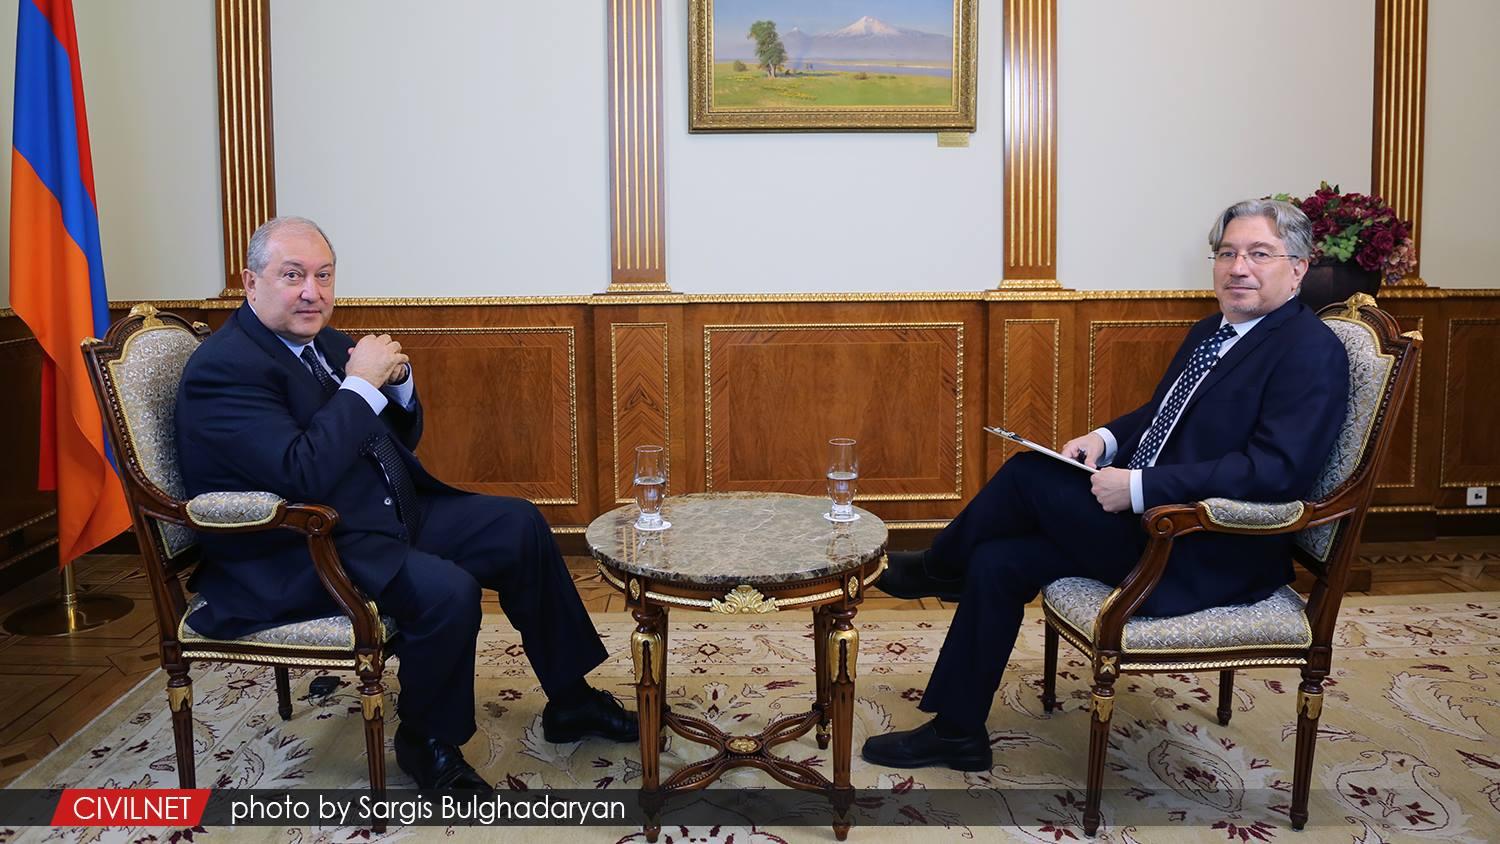 PoliTalks with President Armen Sarkissian